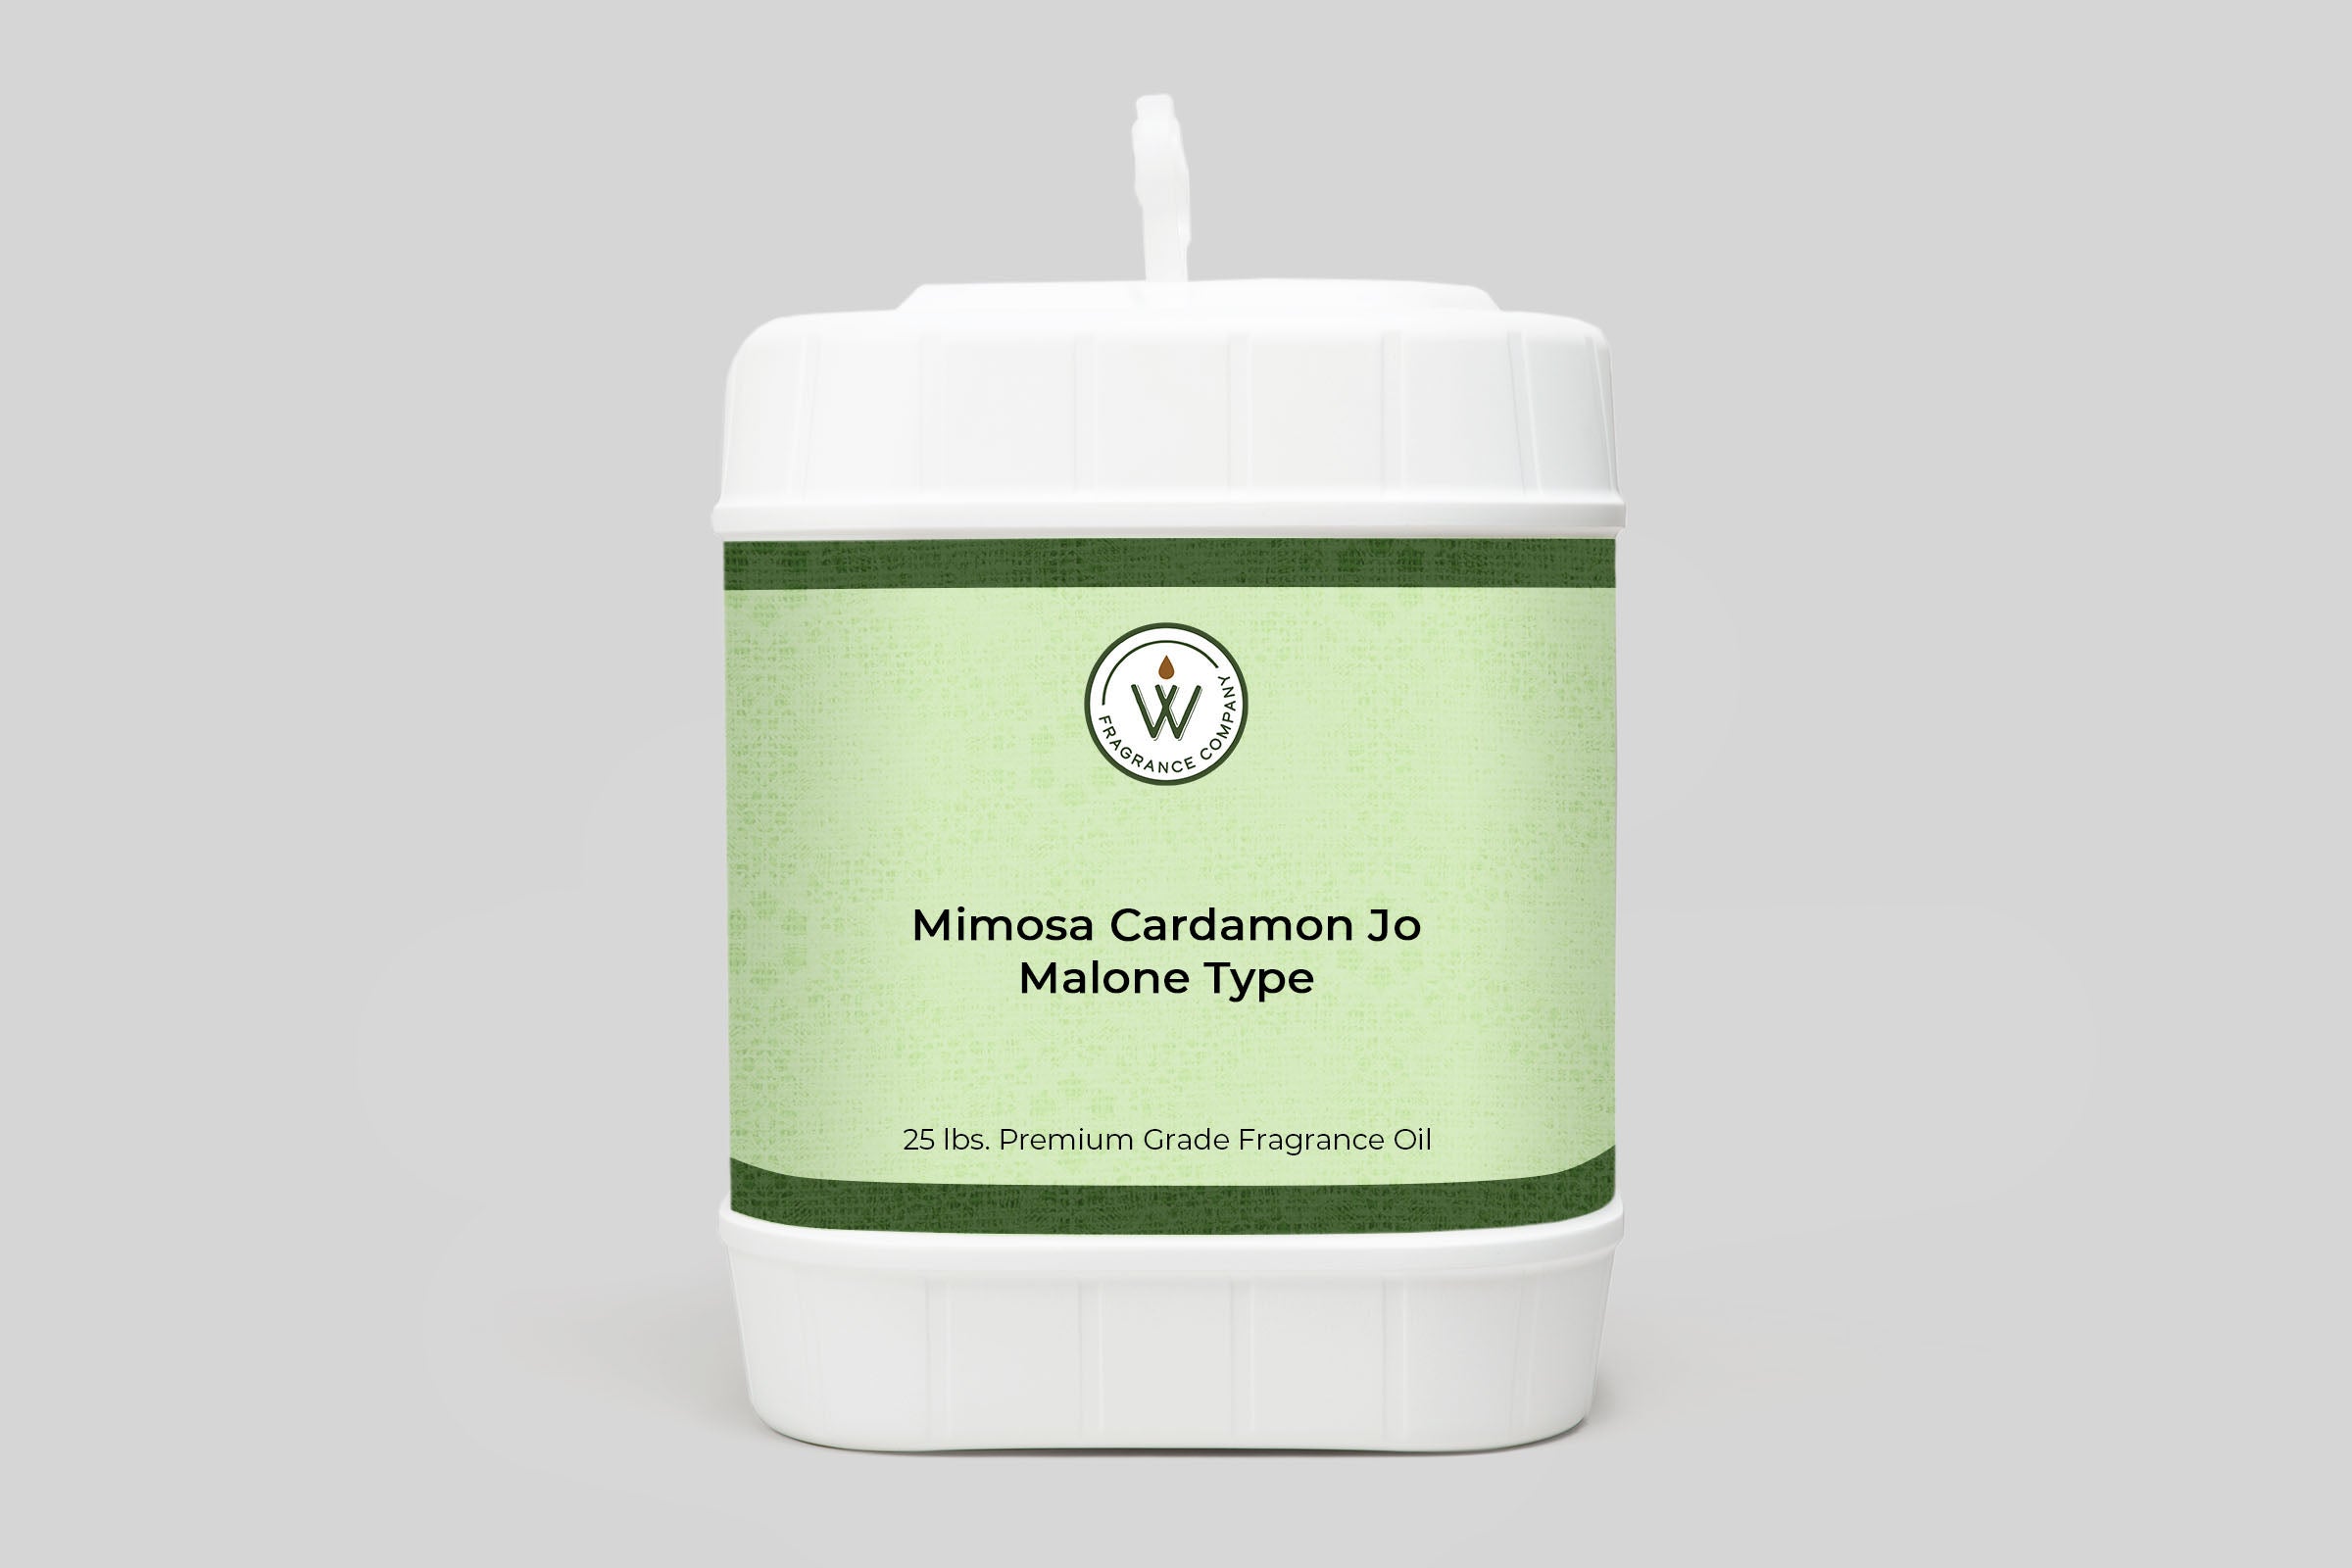 Mimosa Cardamon Jo Malone Type Fragrance Oil